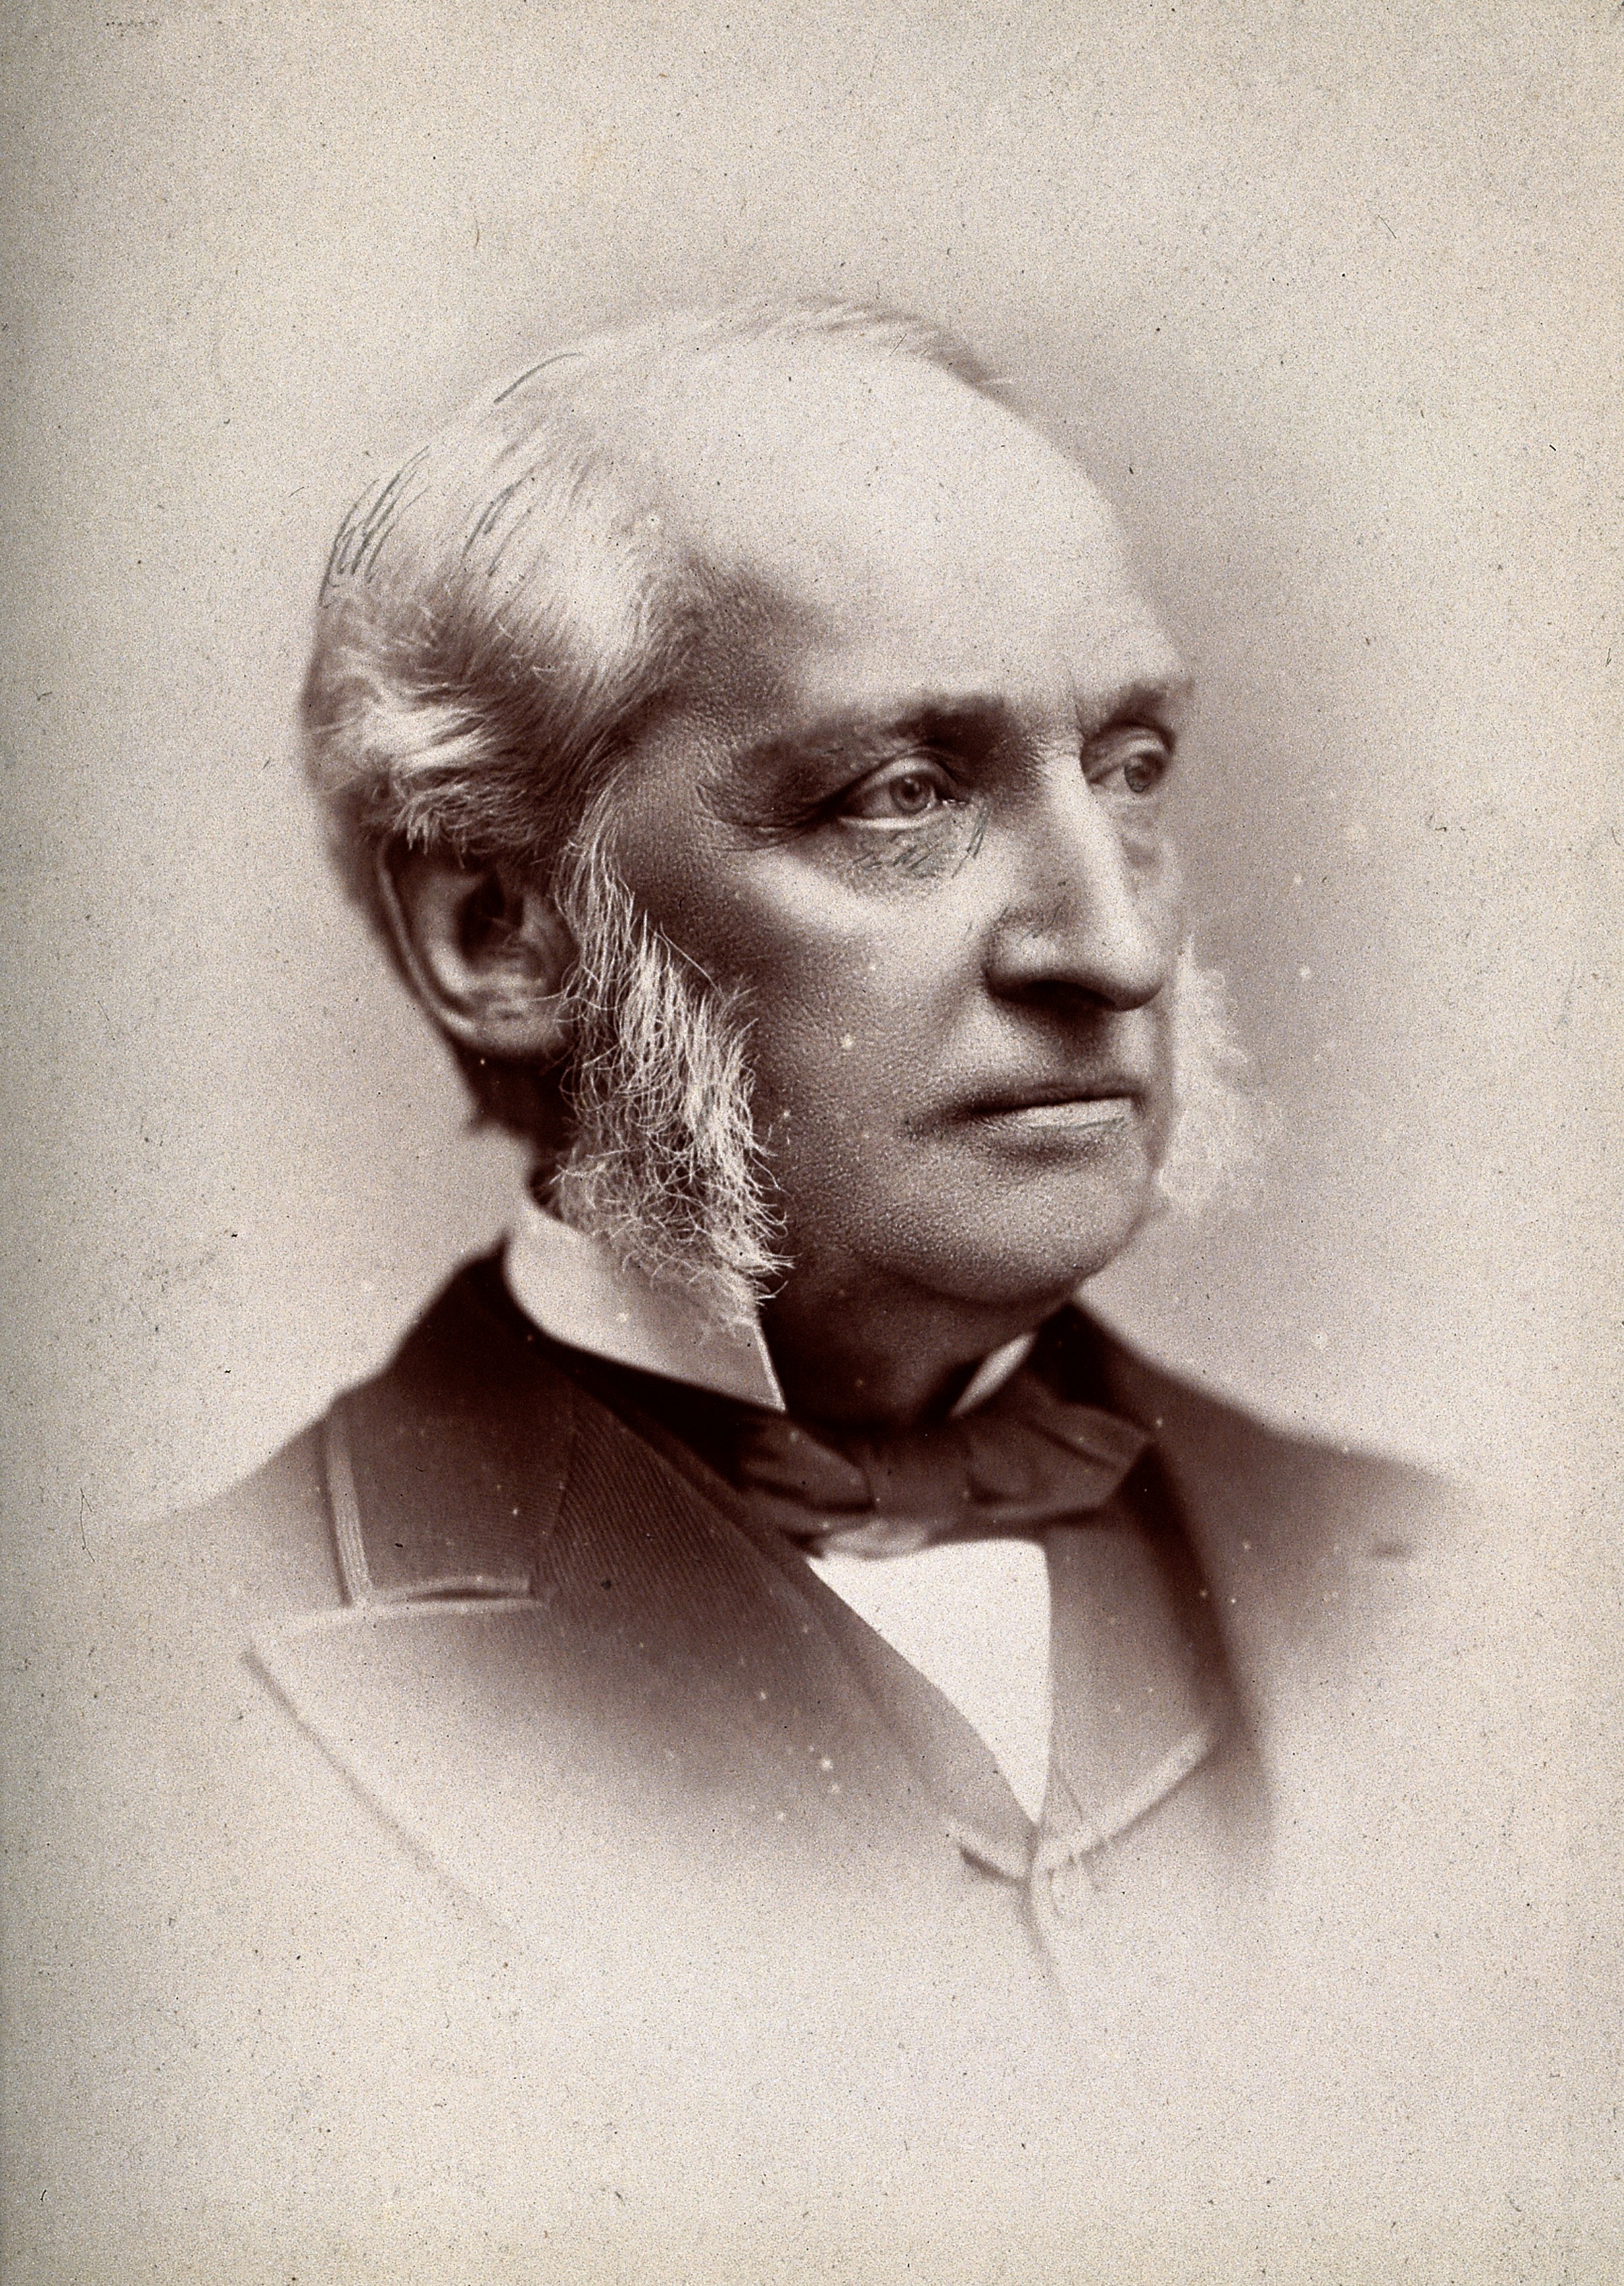 Sir George Johnson. Photograph by G. Jerrard, 1881. Wellcome V0026616